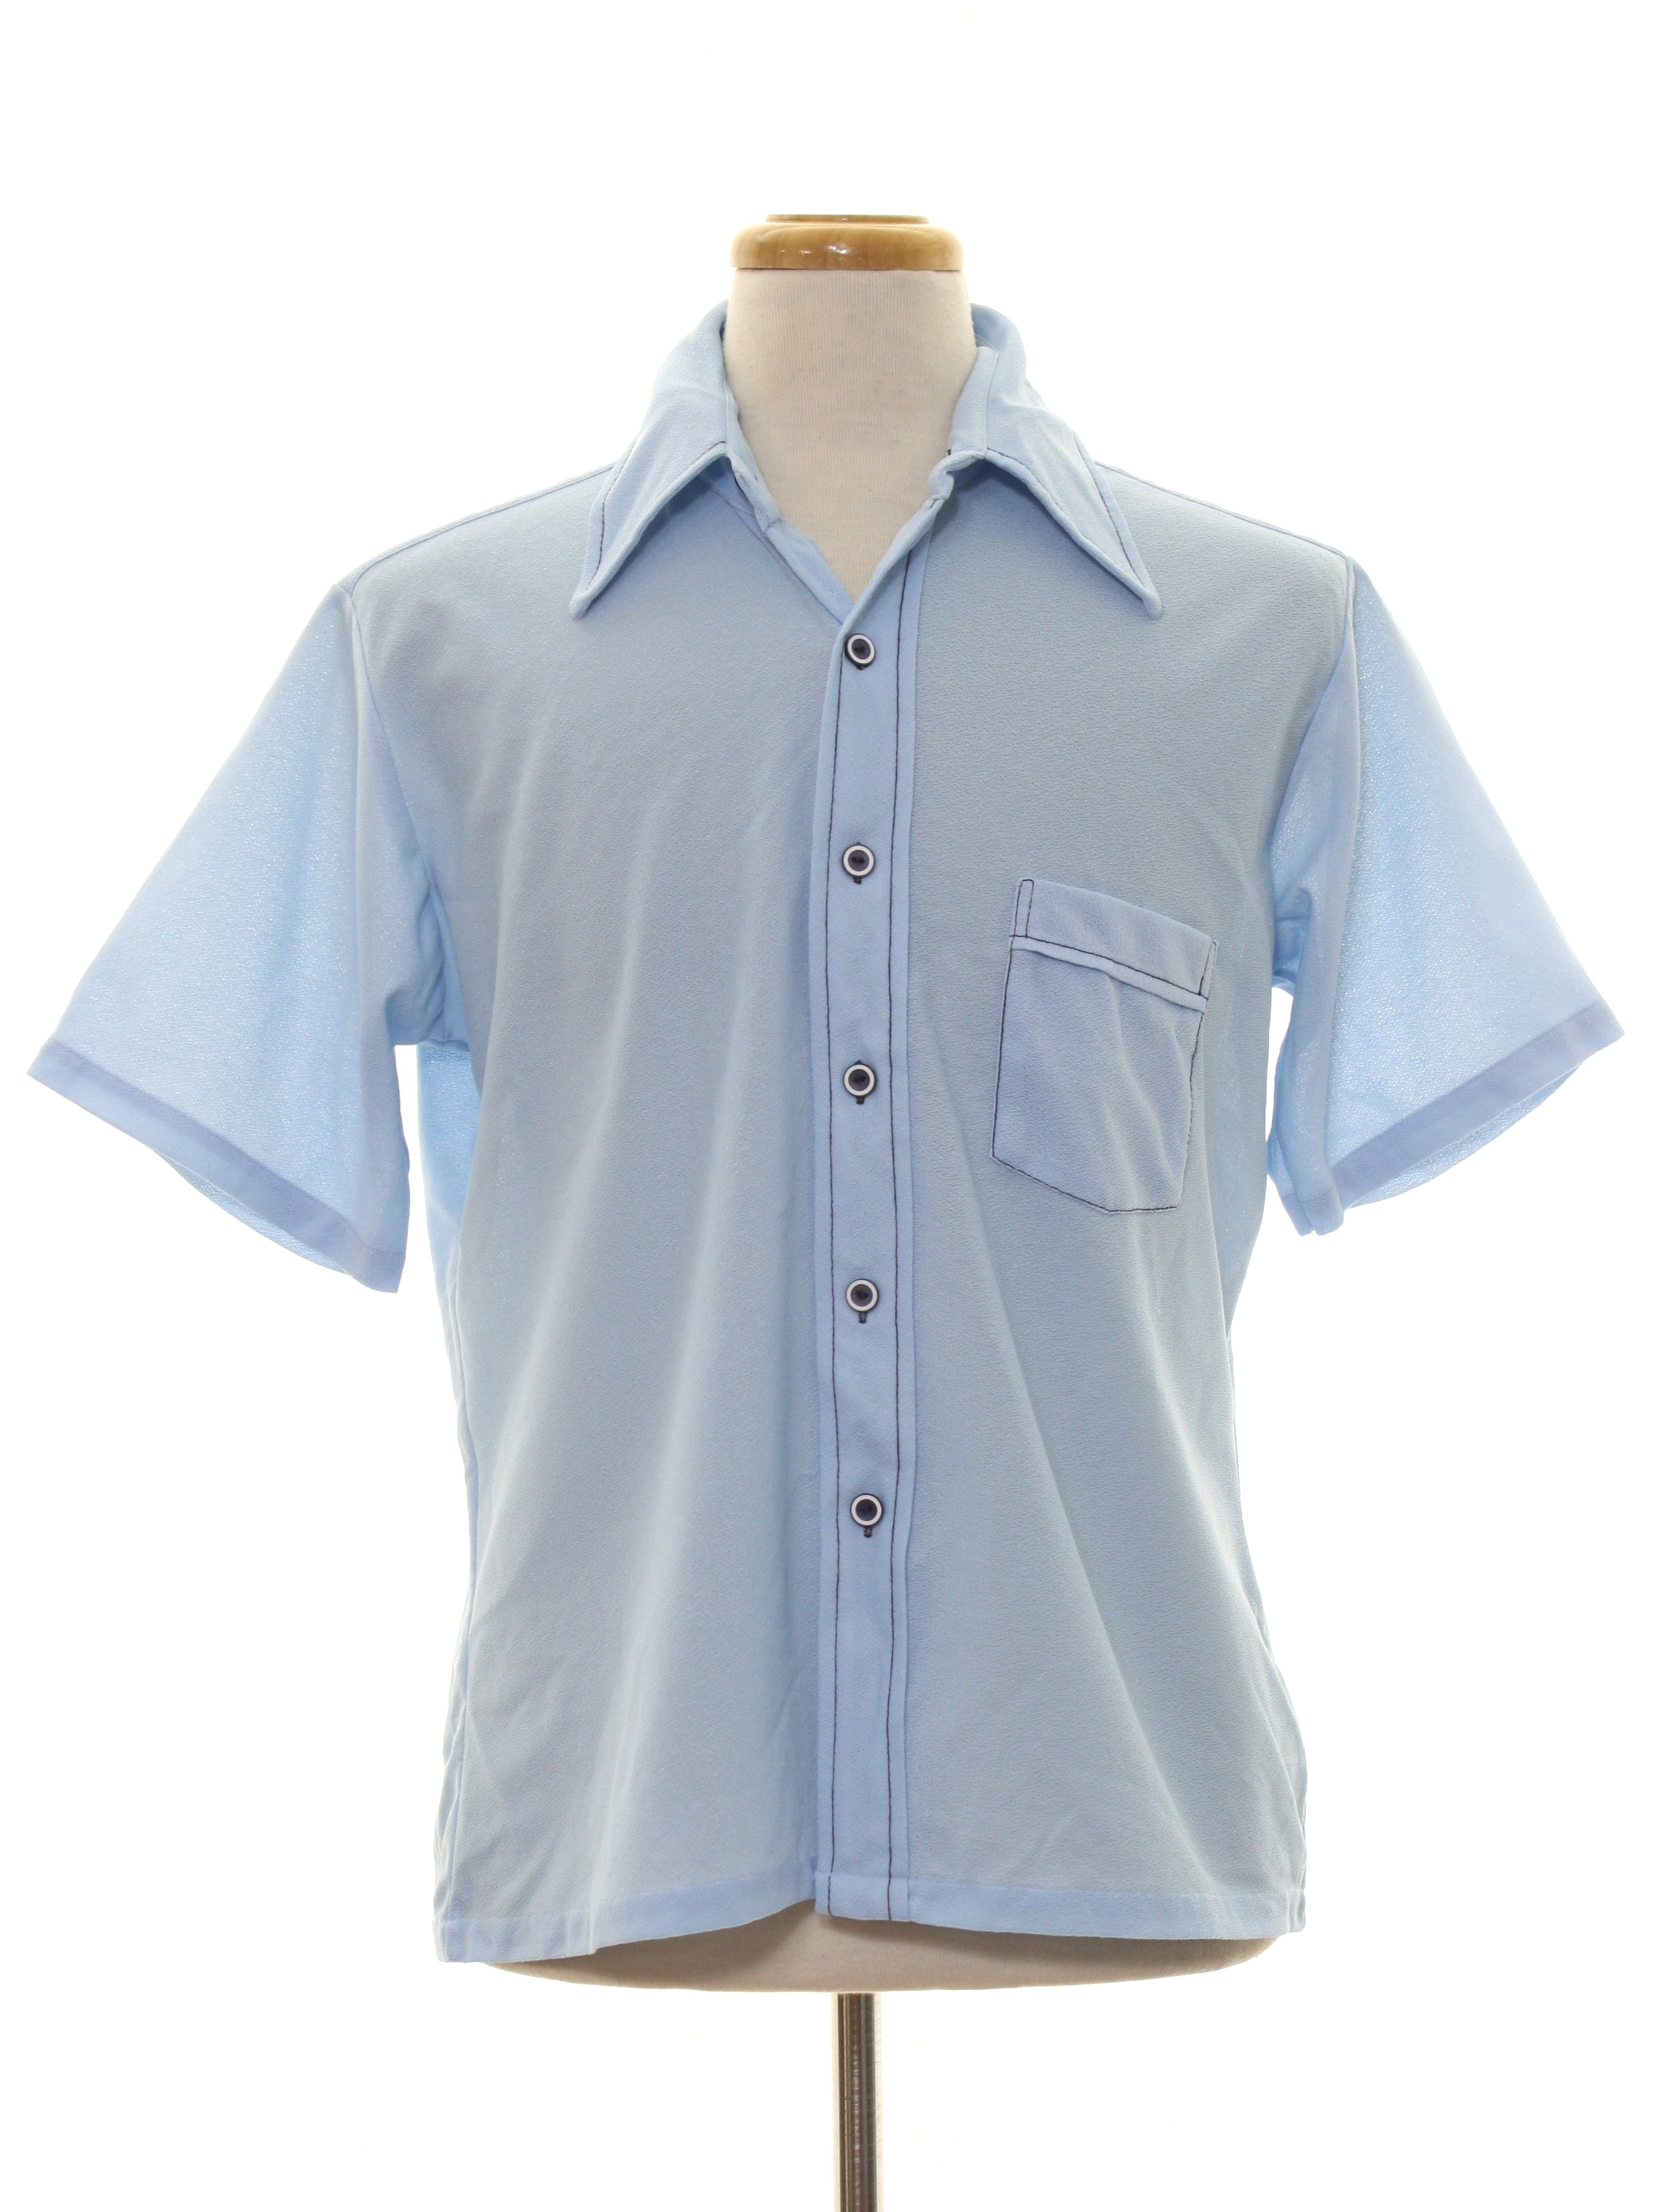 Vintage National Shirt Shops 70's Shirt: 70s -National Shirt Shops ...